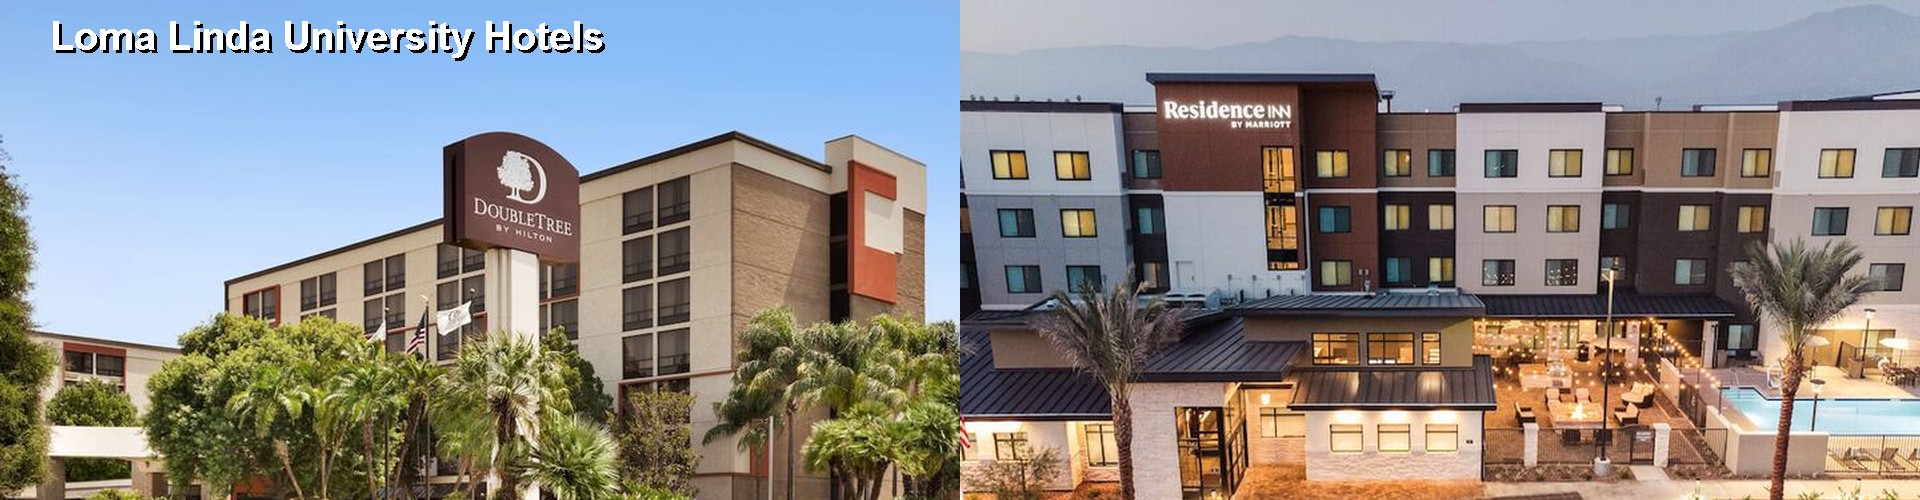 5 Best Hotels near Loma Linda University